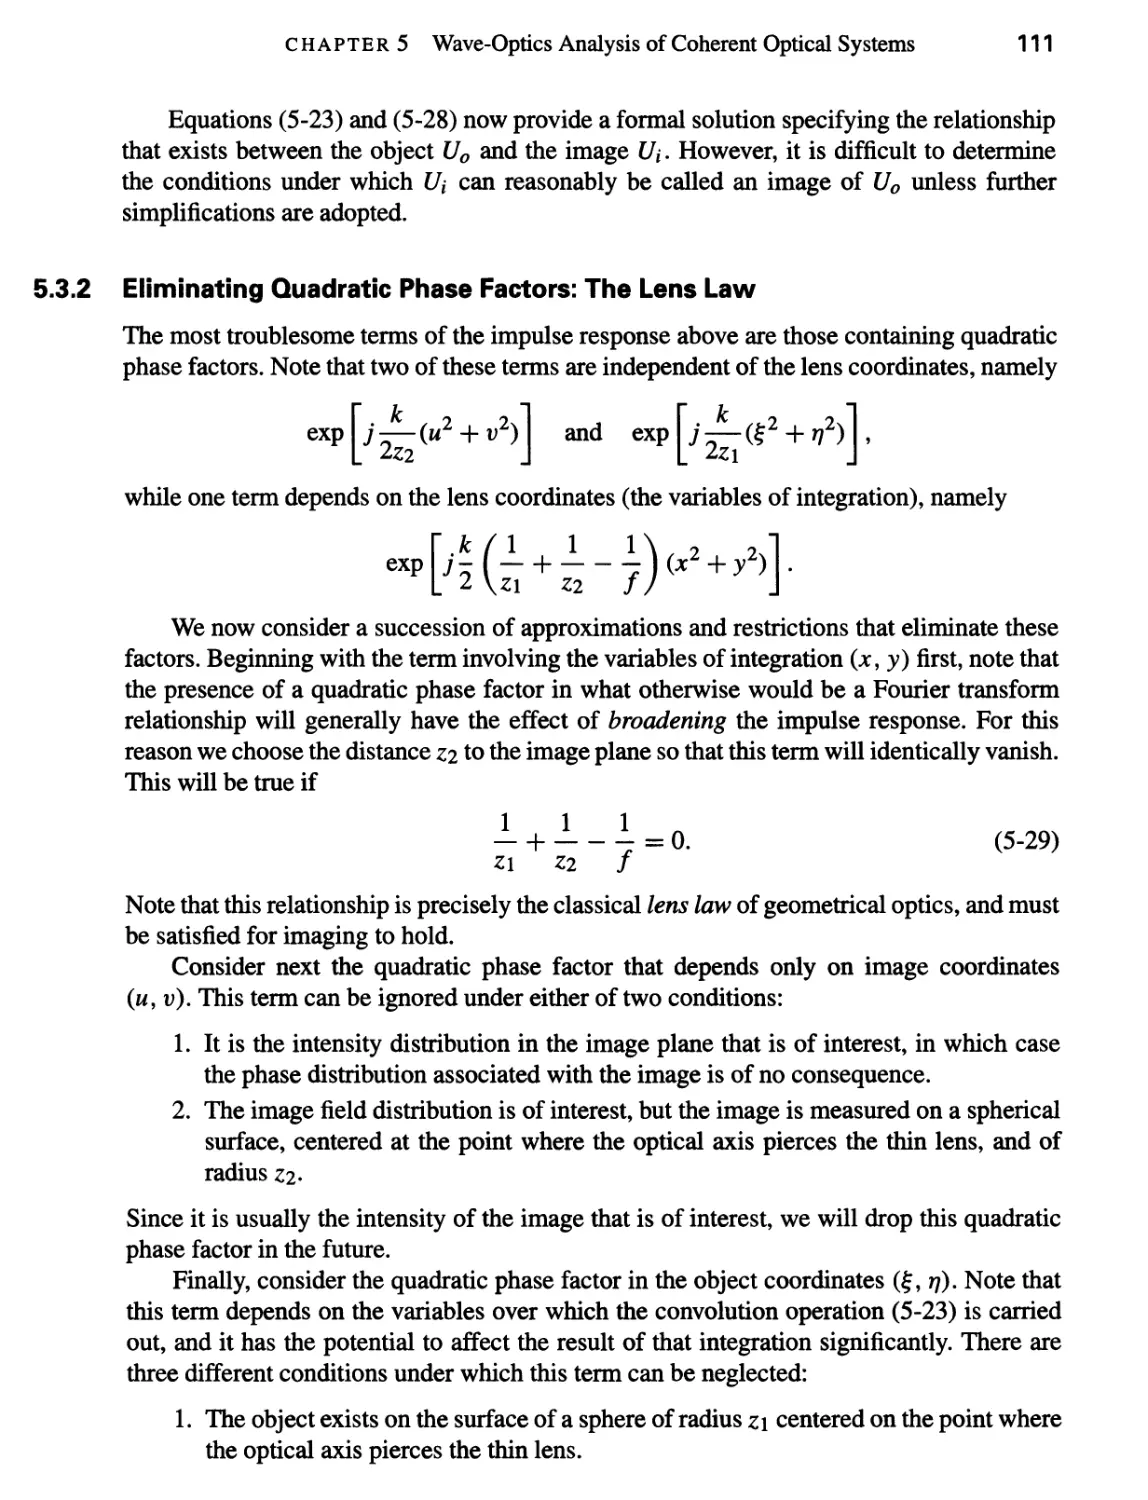 5.3.2 Eliminating Quadratic Phase Factors: The Lens Law 111